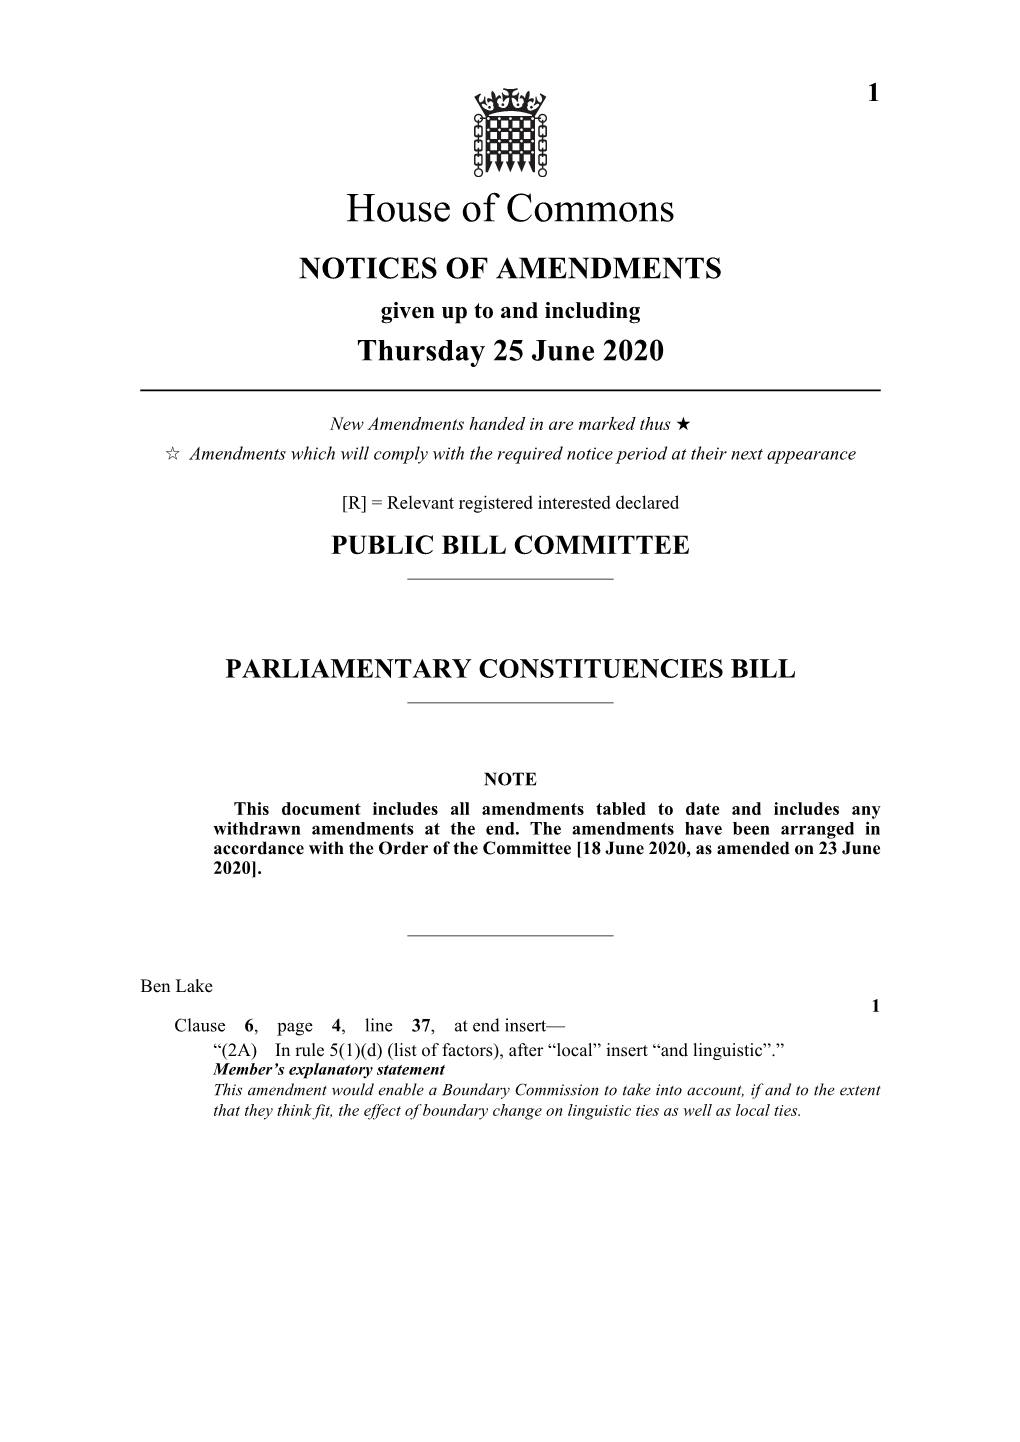 Public Bill Committee Parliamentary Constituencies Bill